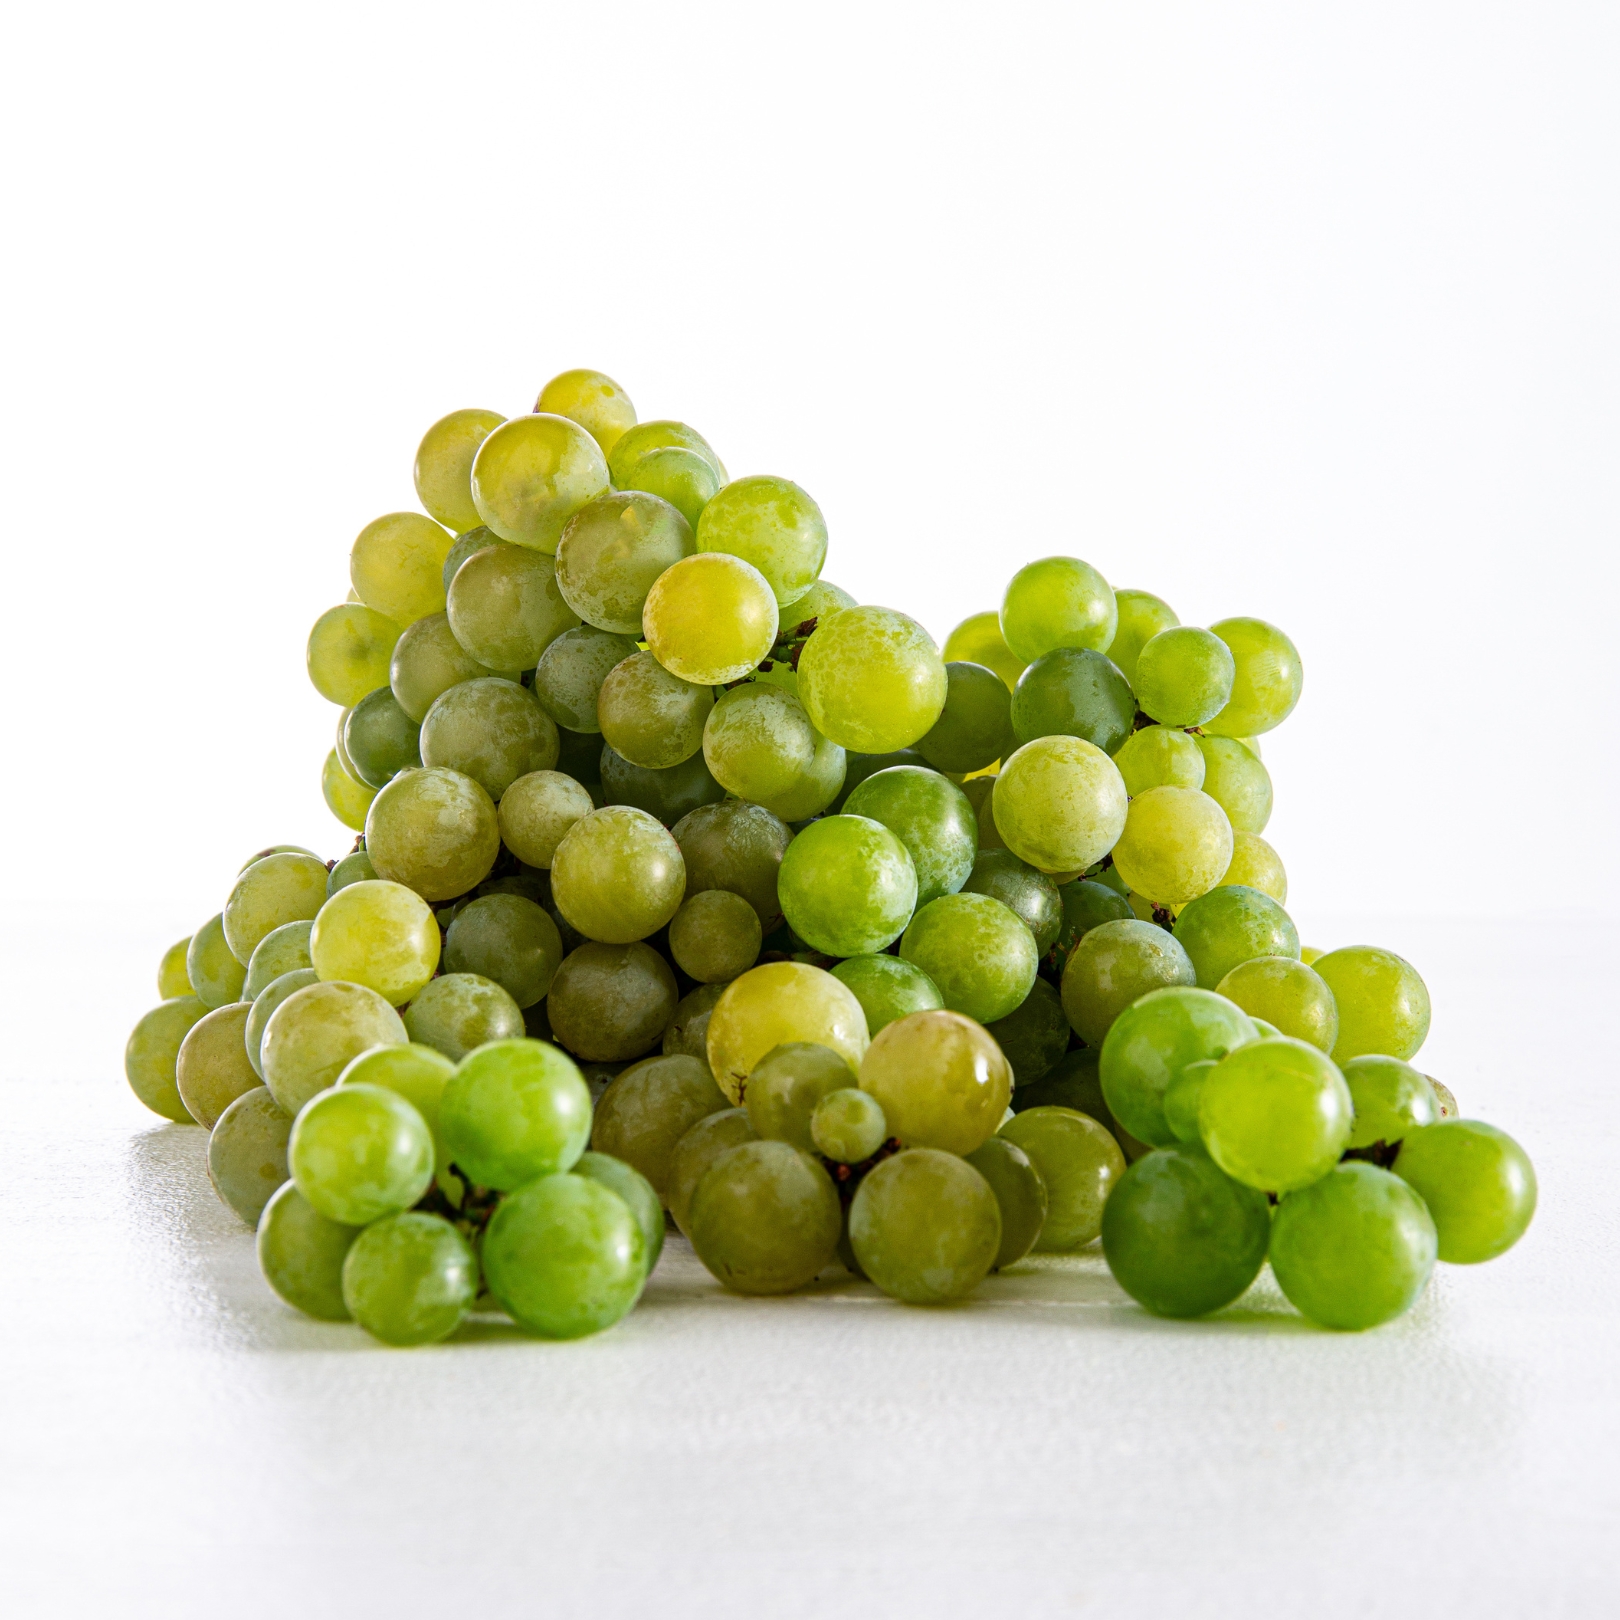 Buy Grapes - White Diamond Online NZ